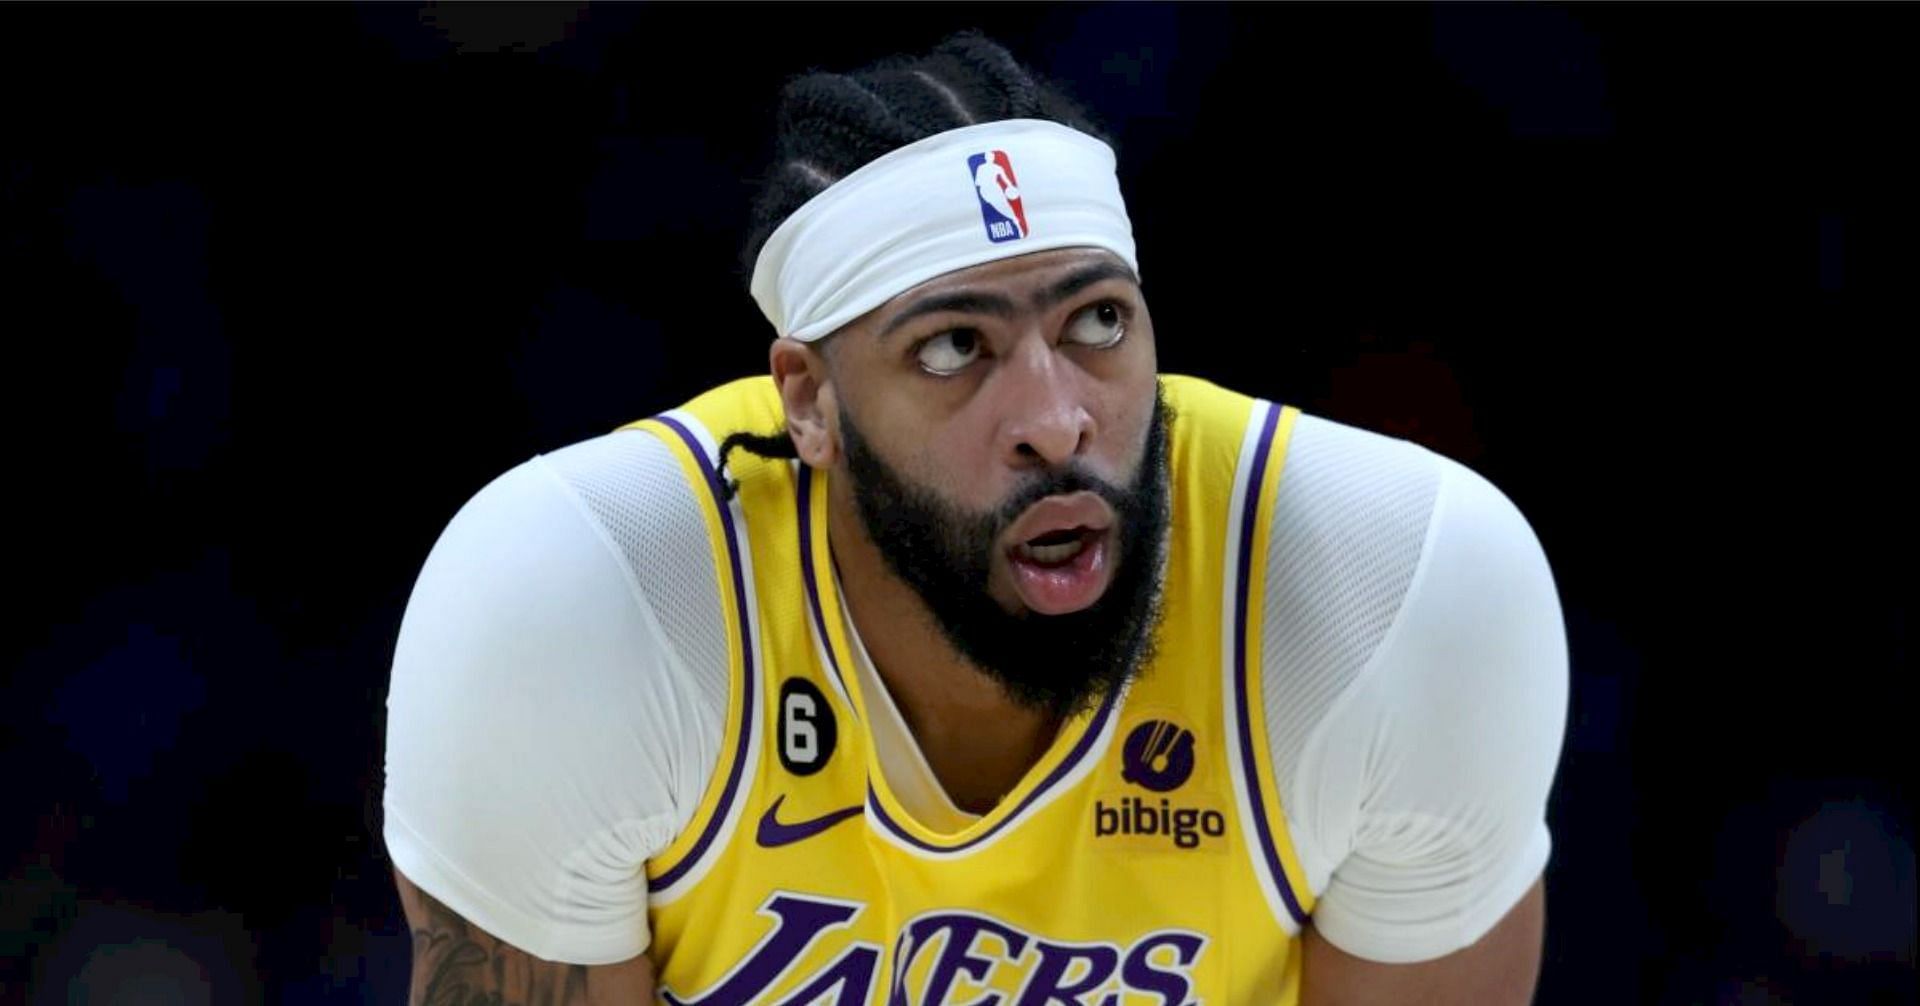 Lakers, minus Anthony Davis, set to take on Kings